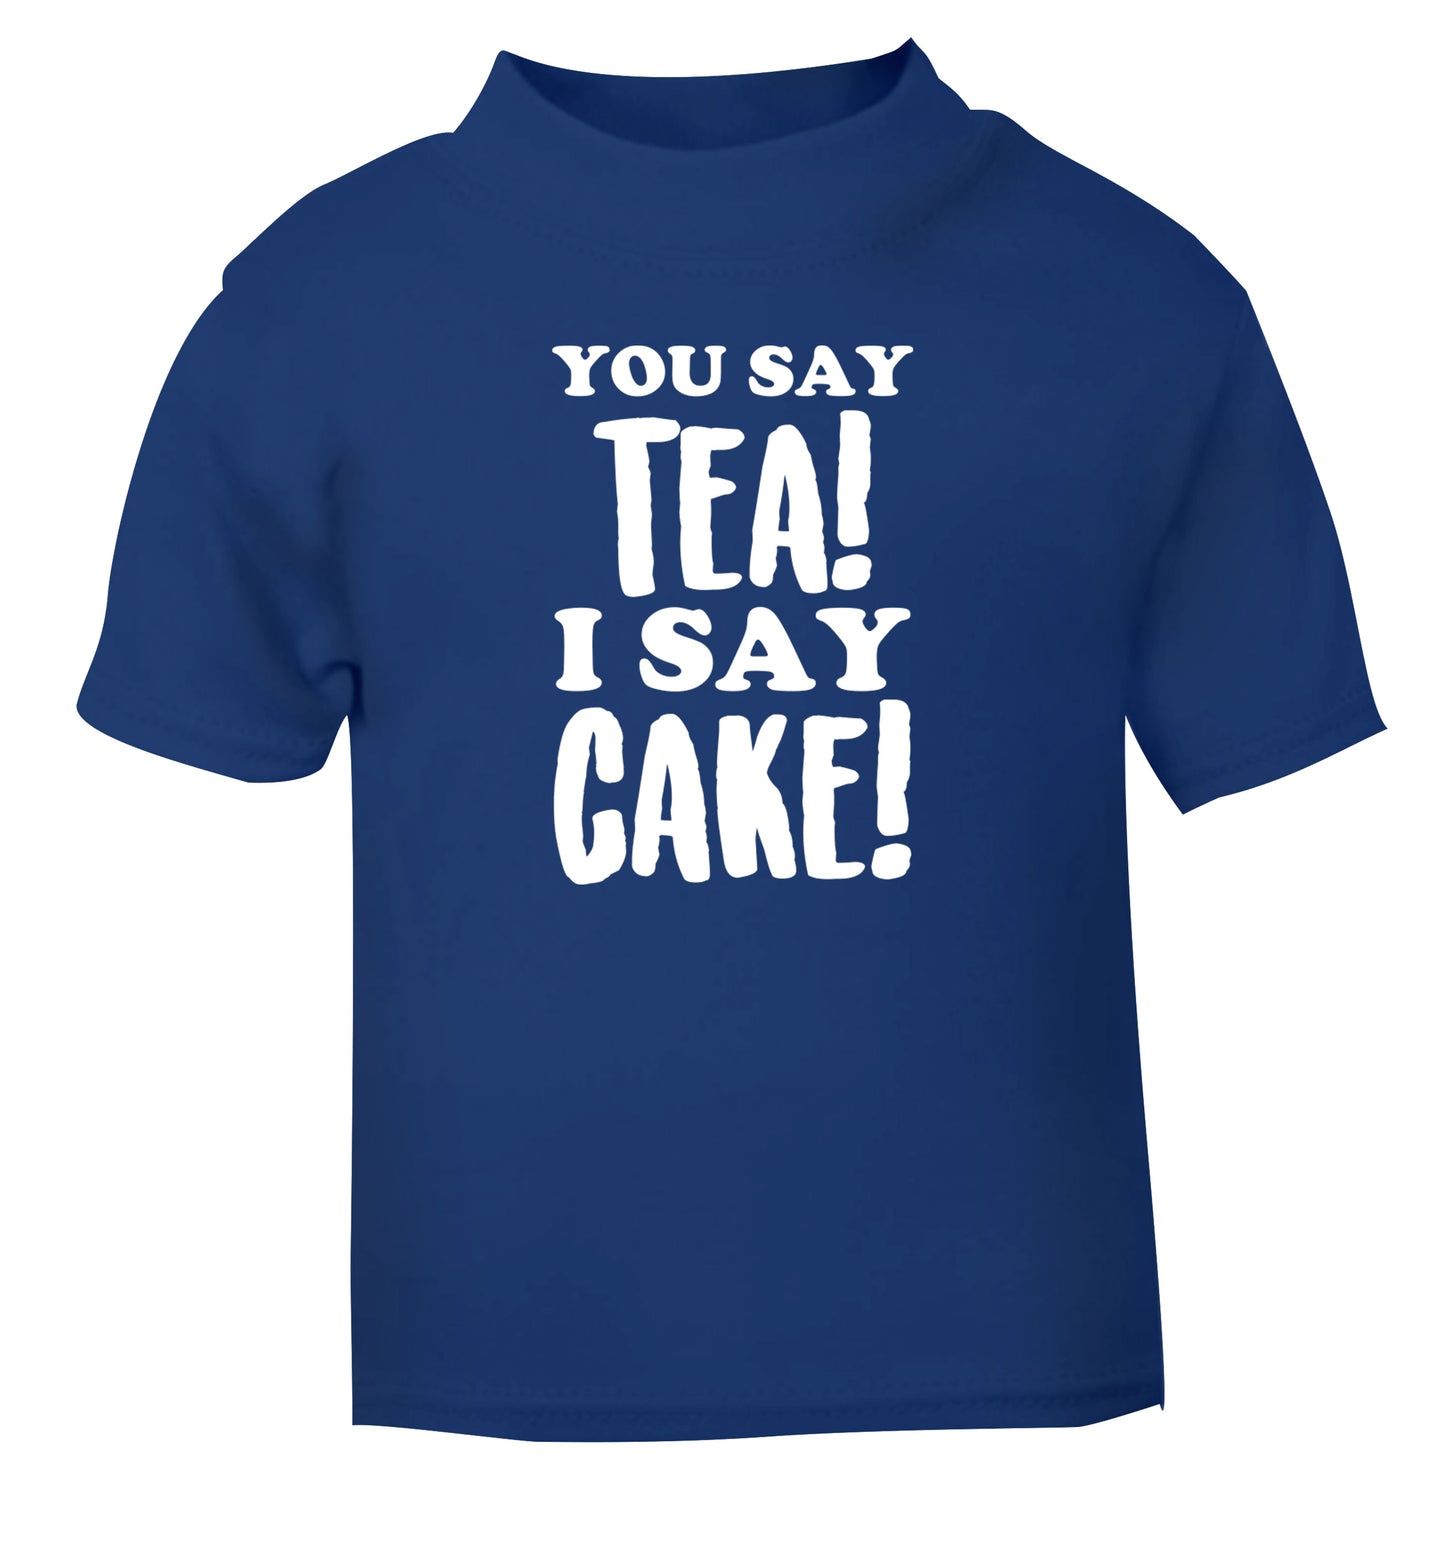 You say tea I say cake! blue Baby Toddler Tshirt 2 Years